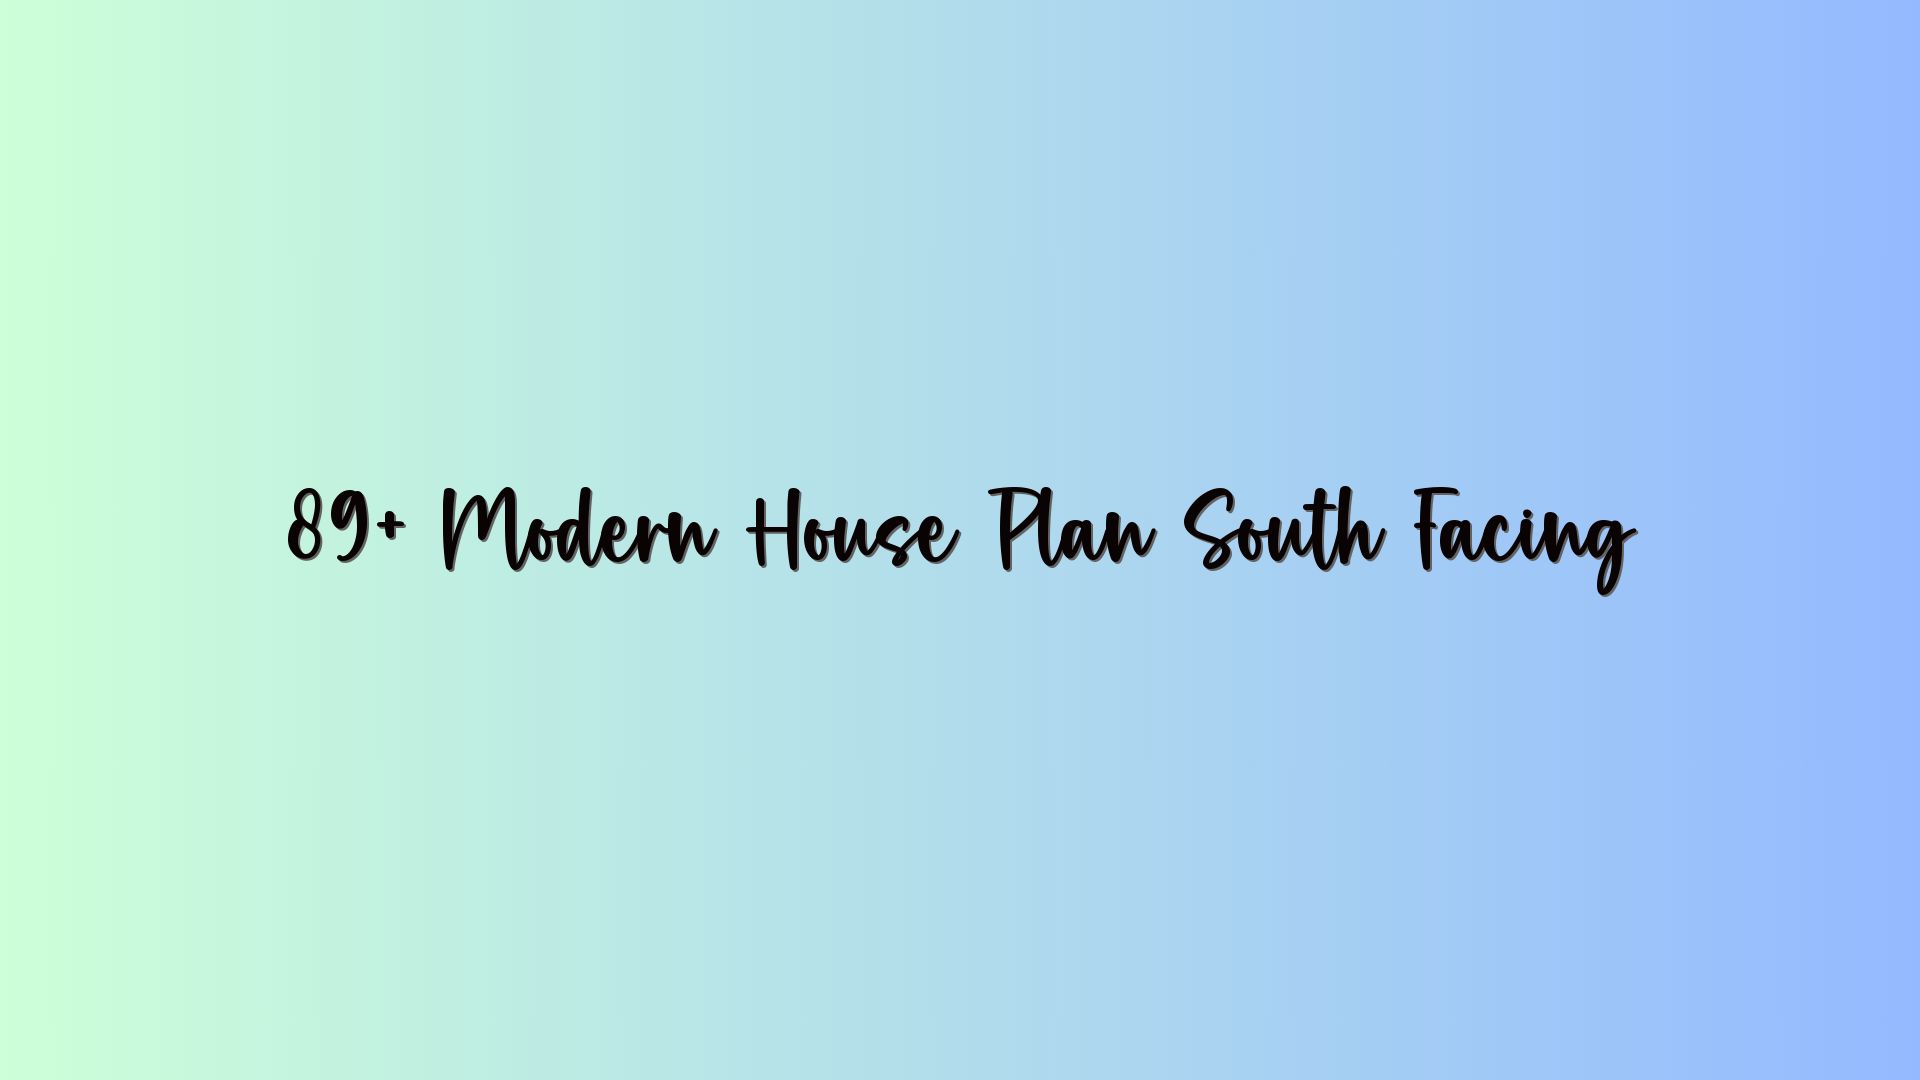 89+ Modern House Plan South Facing